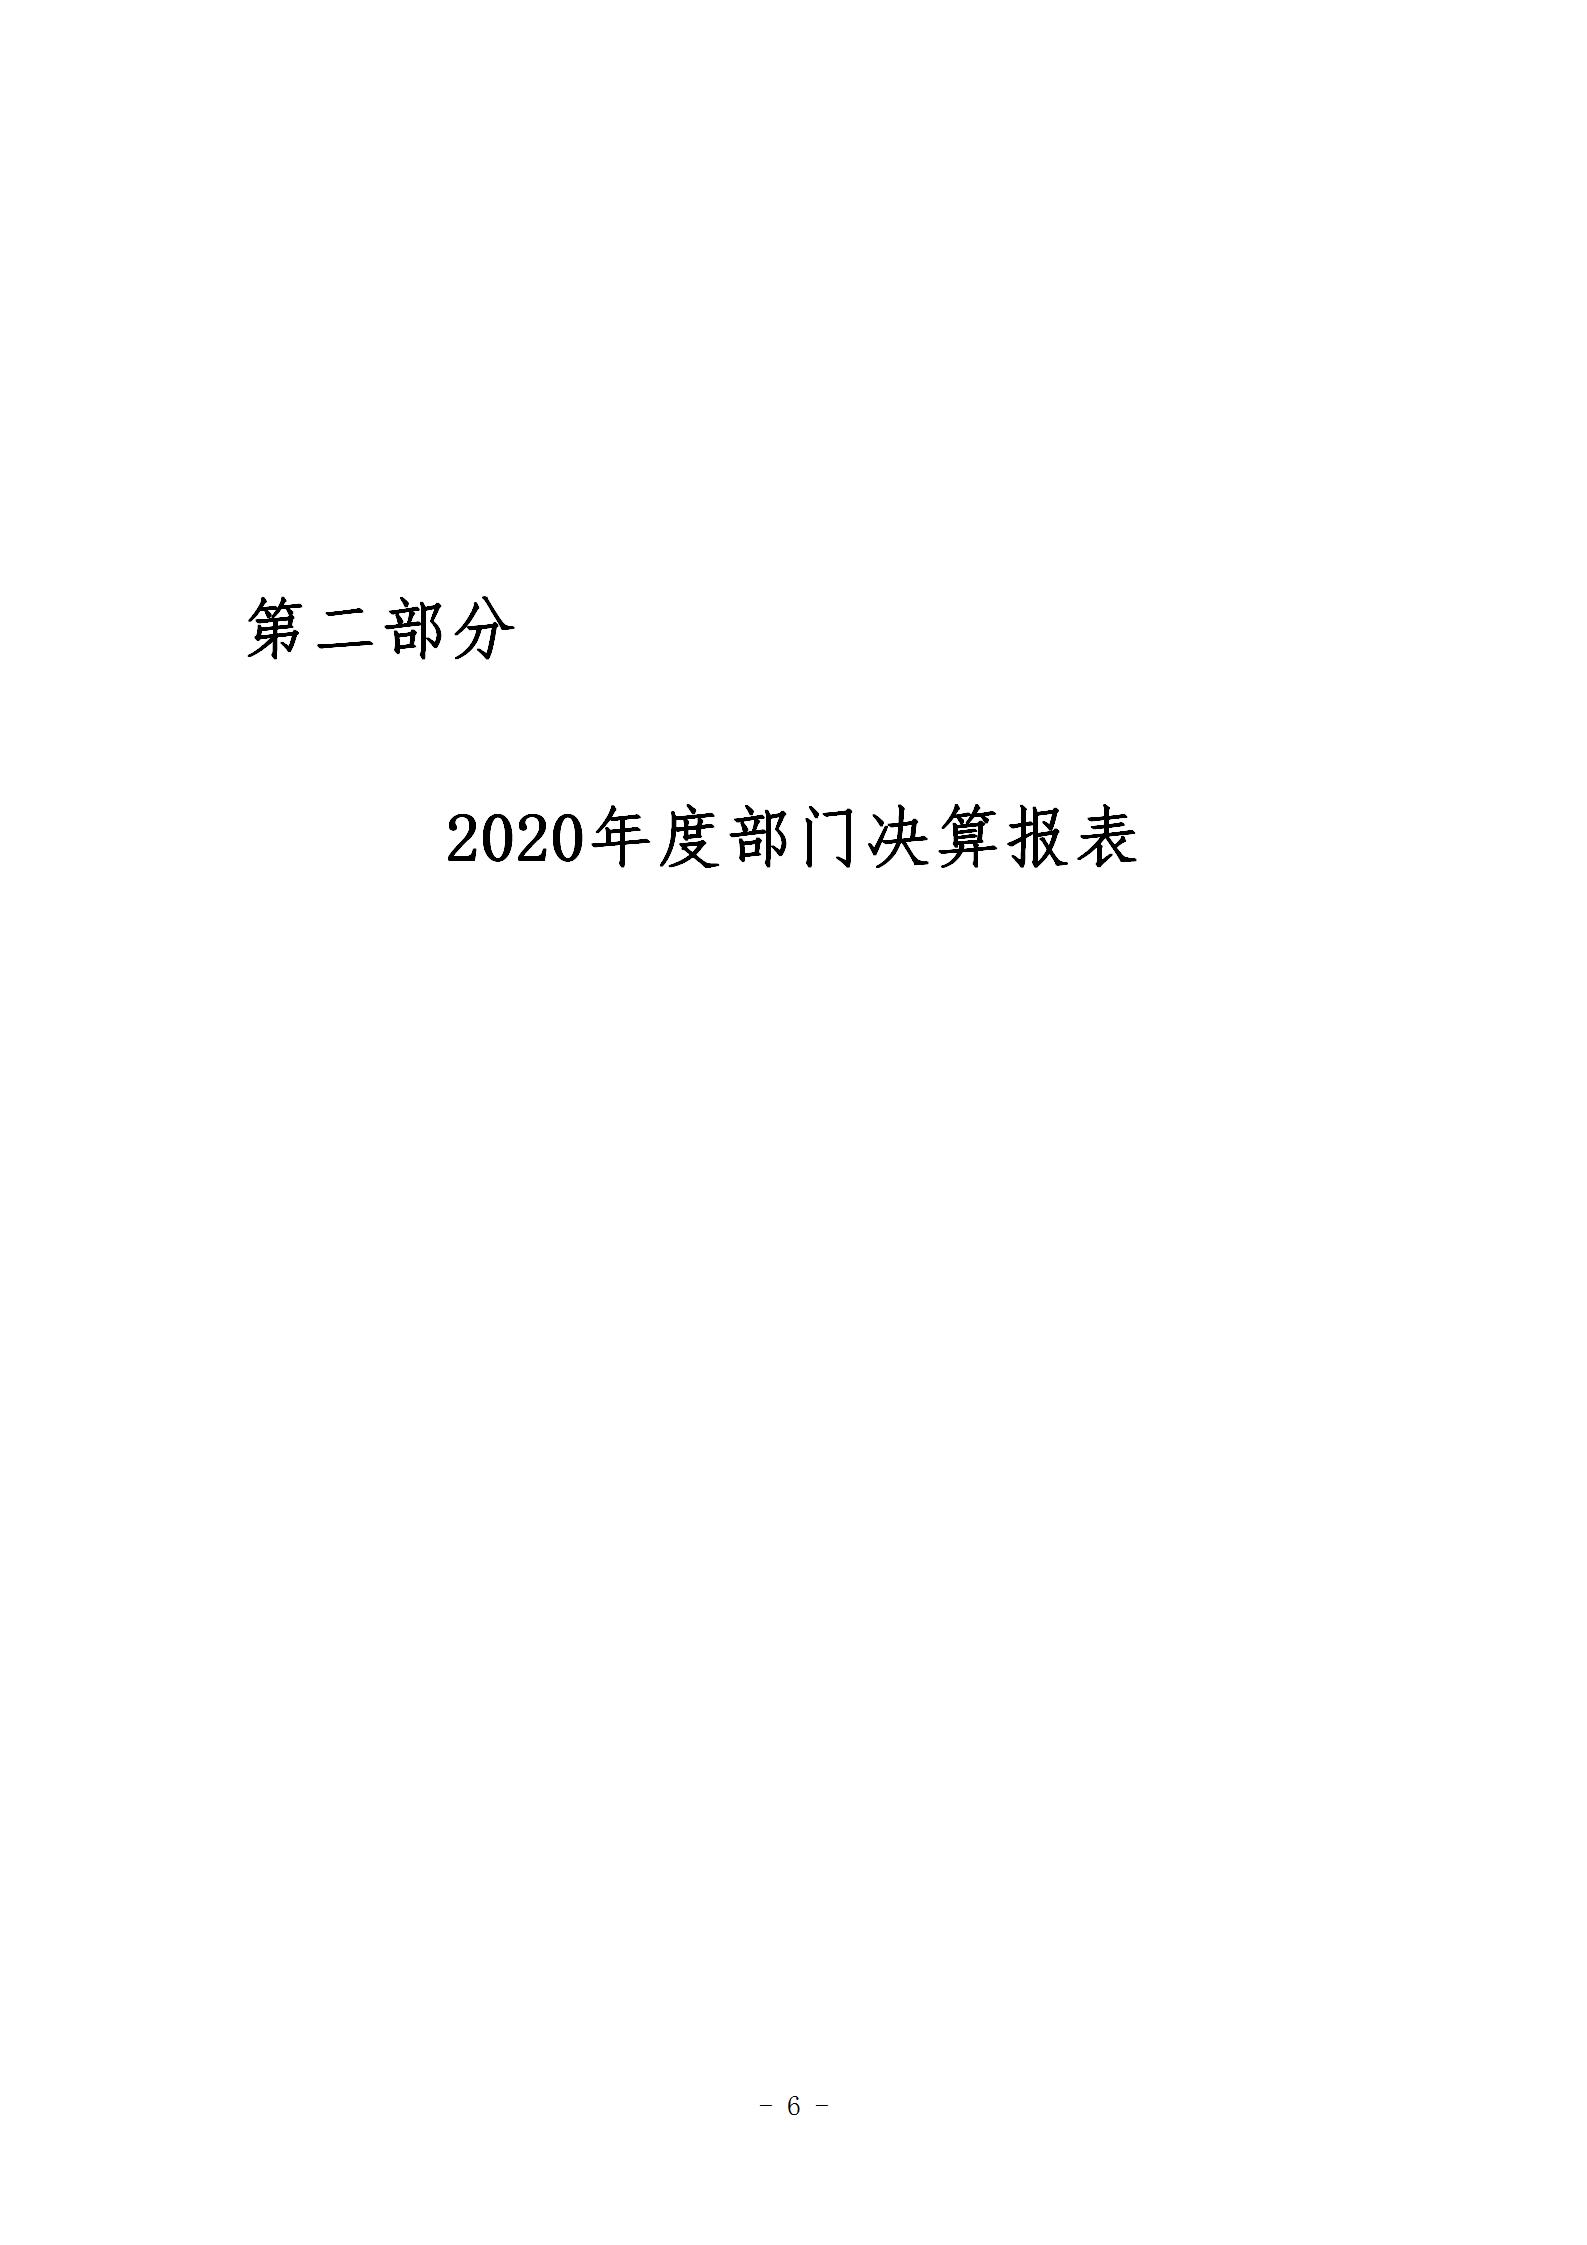 188bet亚洲民间外交战略研究中心2020年度部门决算_06.jpg